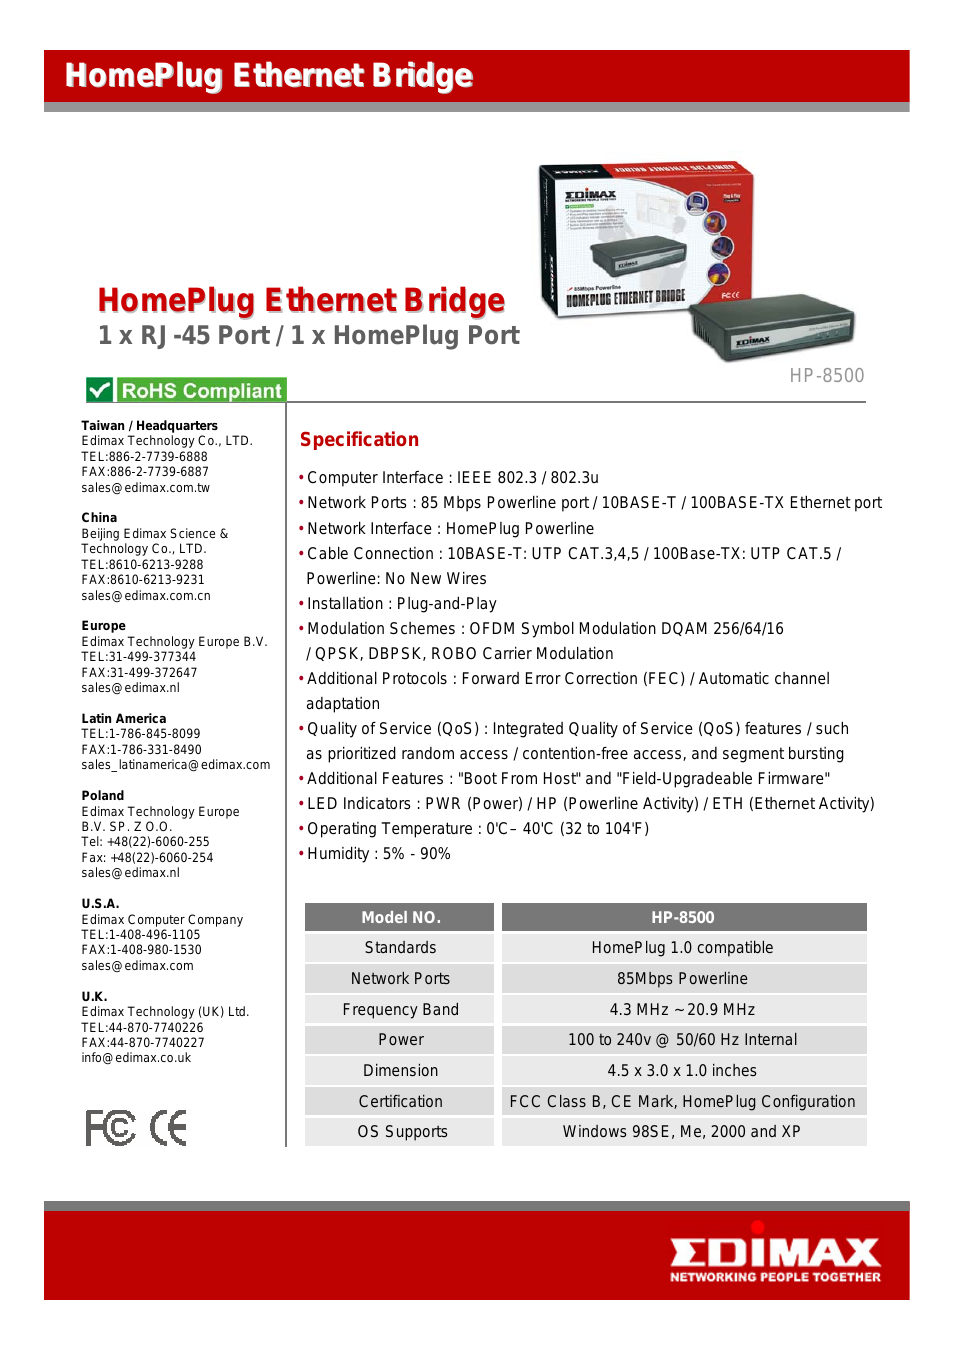 HP-8500K (2pcs a set)